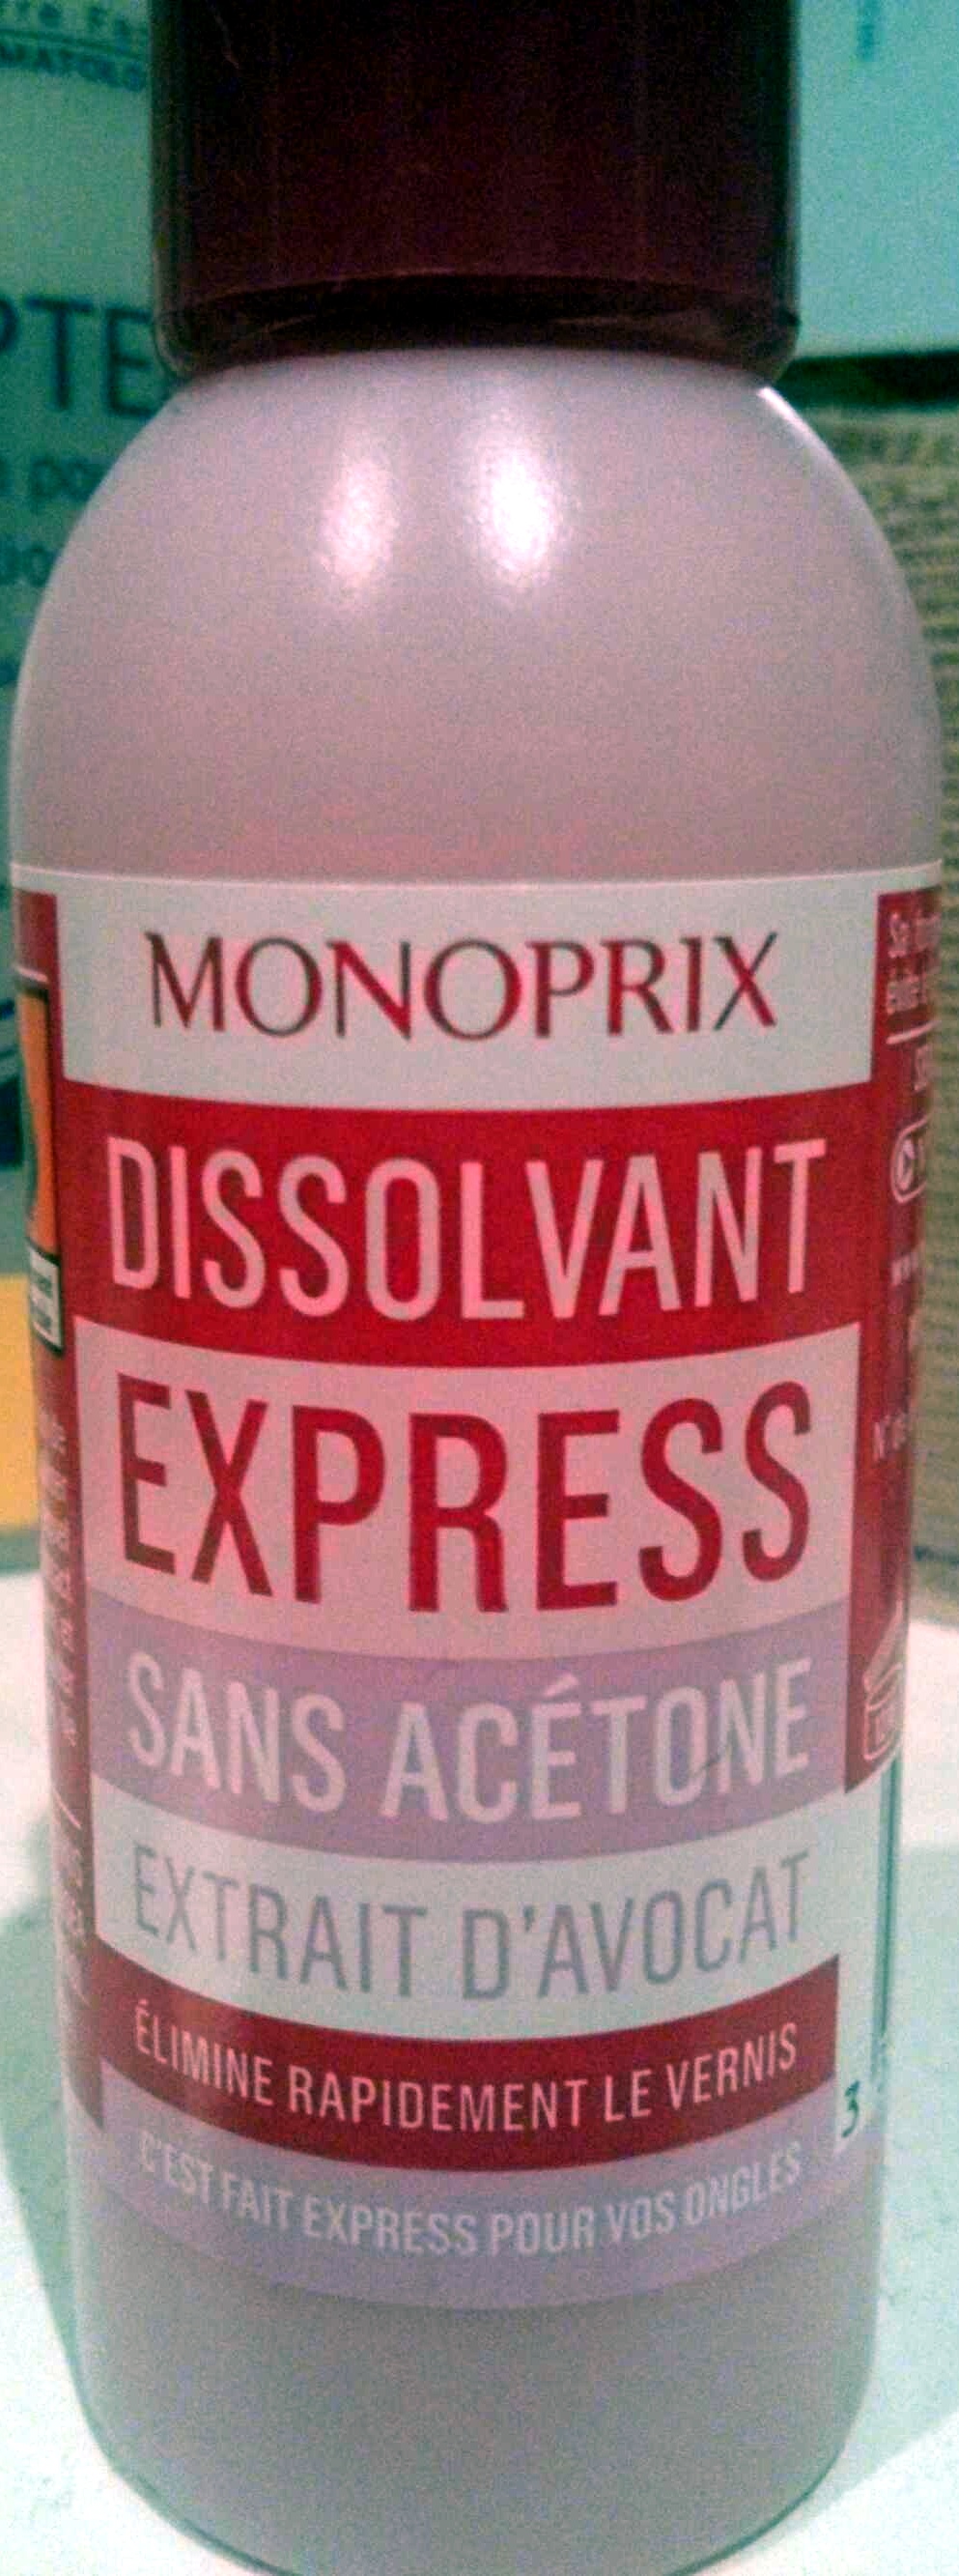 Dissolvant express sans acétone extrait d'avocat - 製品 - fr